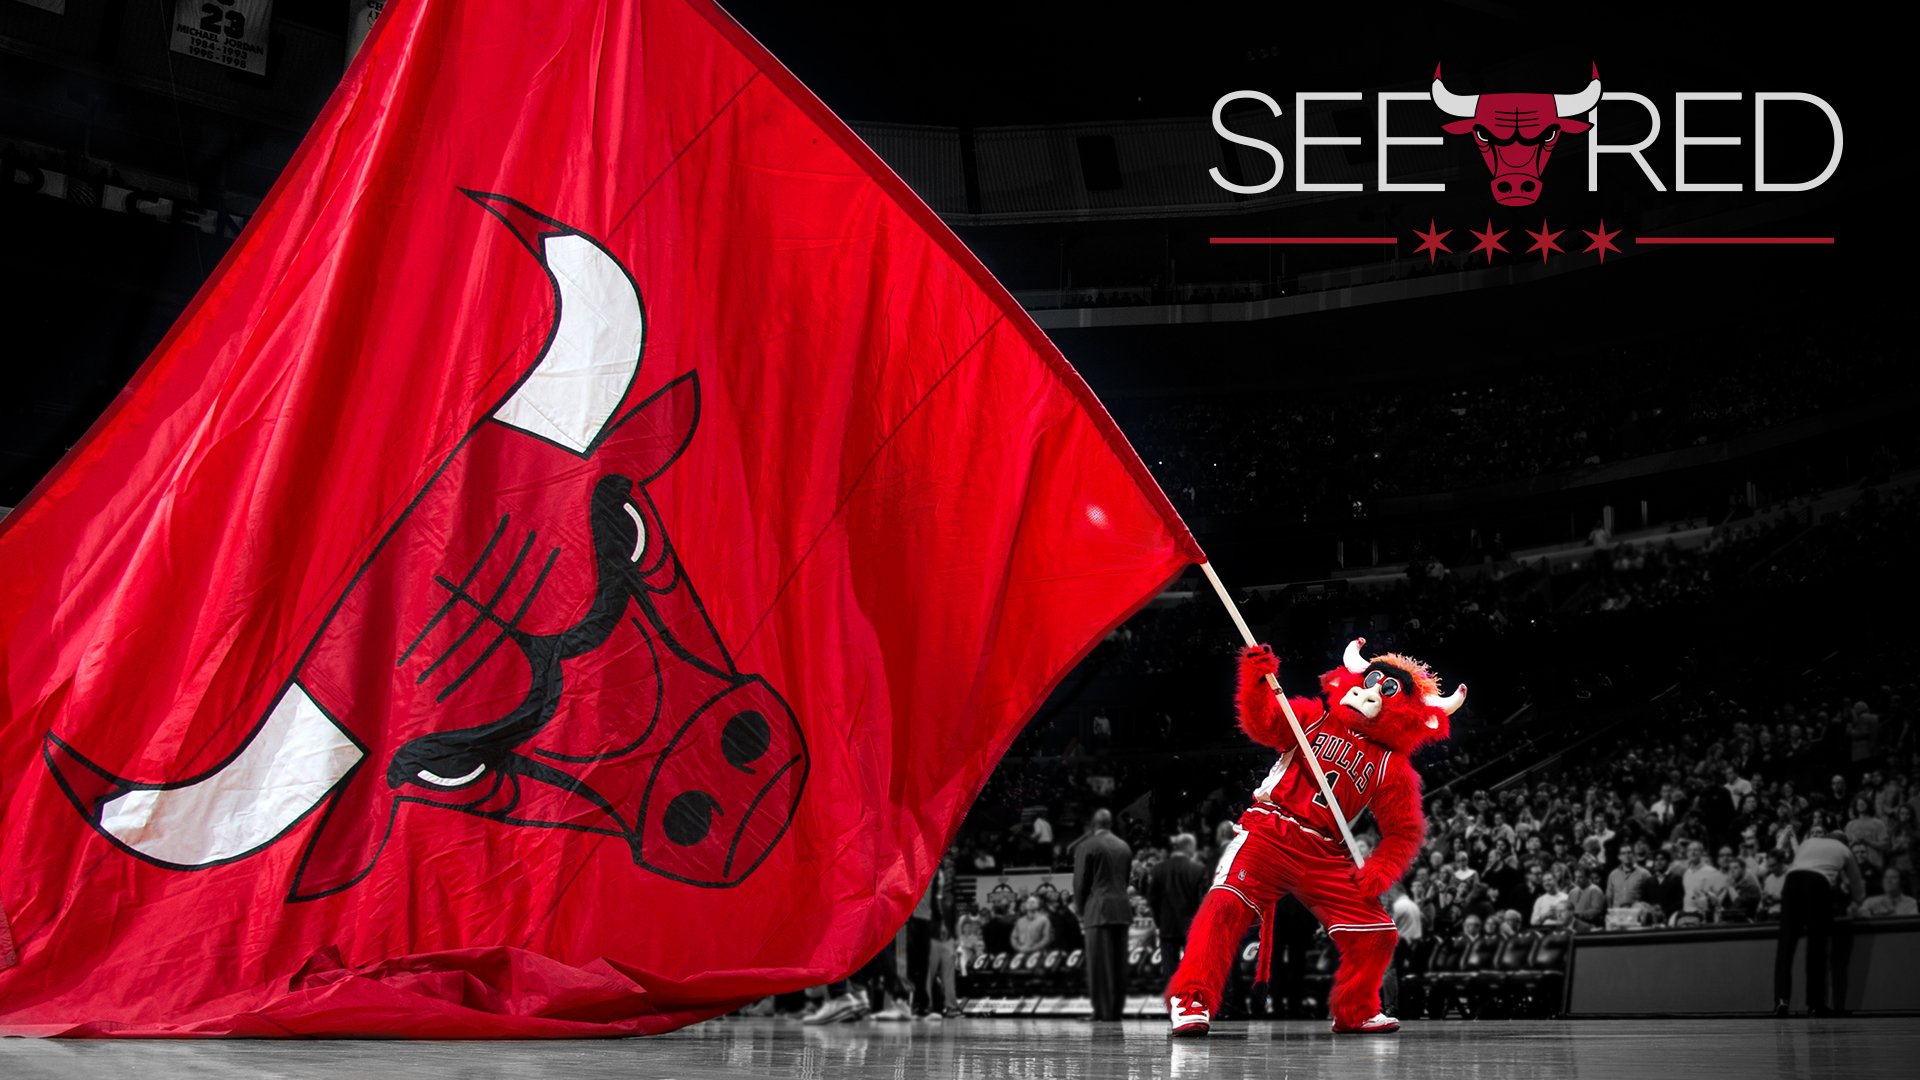 Chicago Bulls 2014 NBA Playoffs See Red 1920x1080